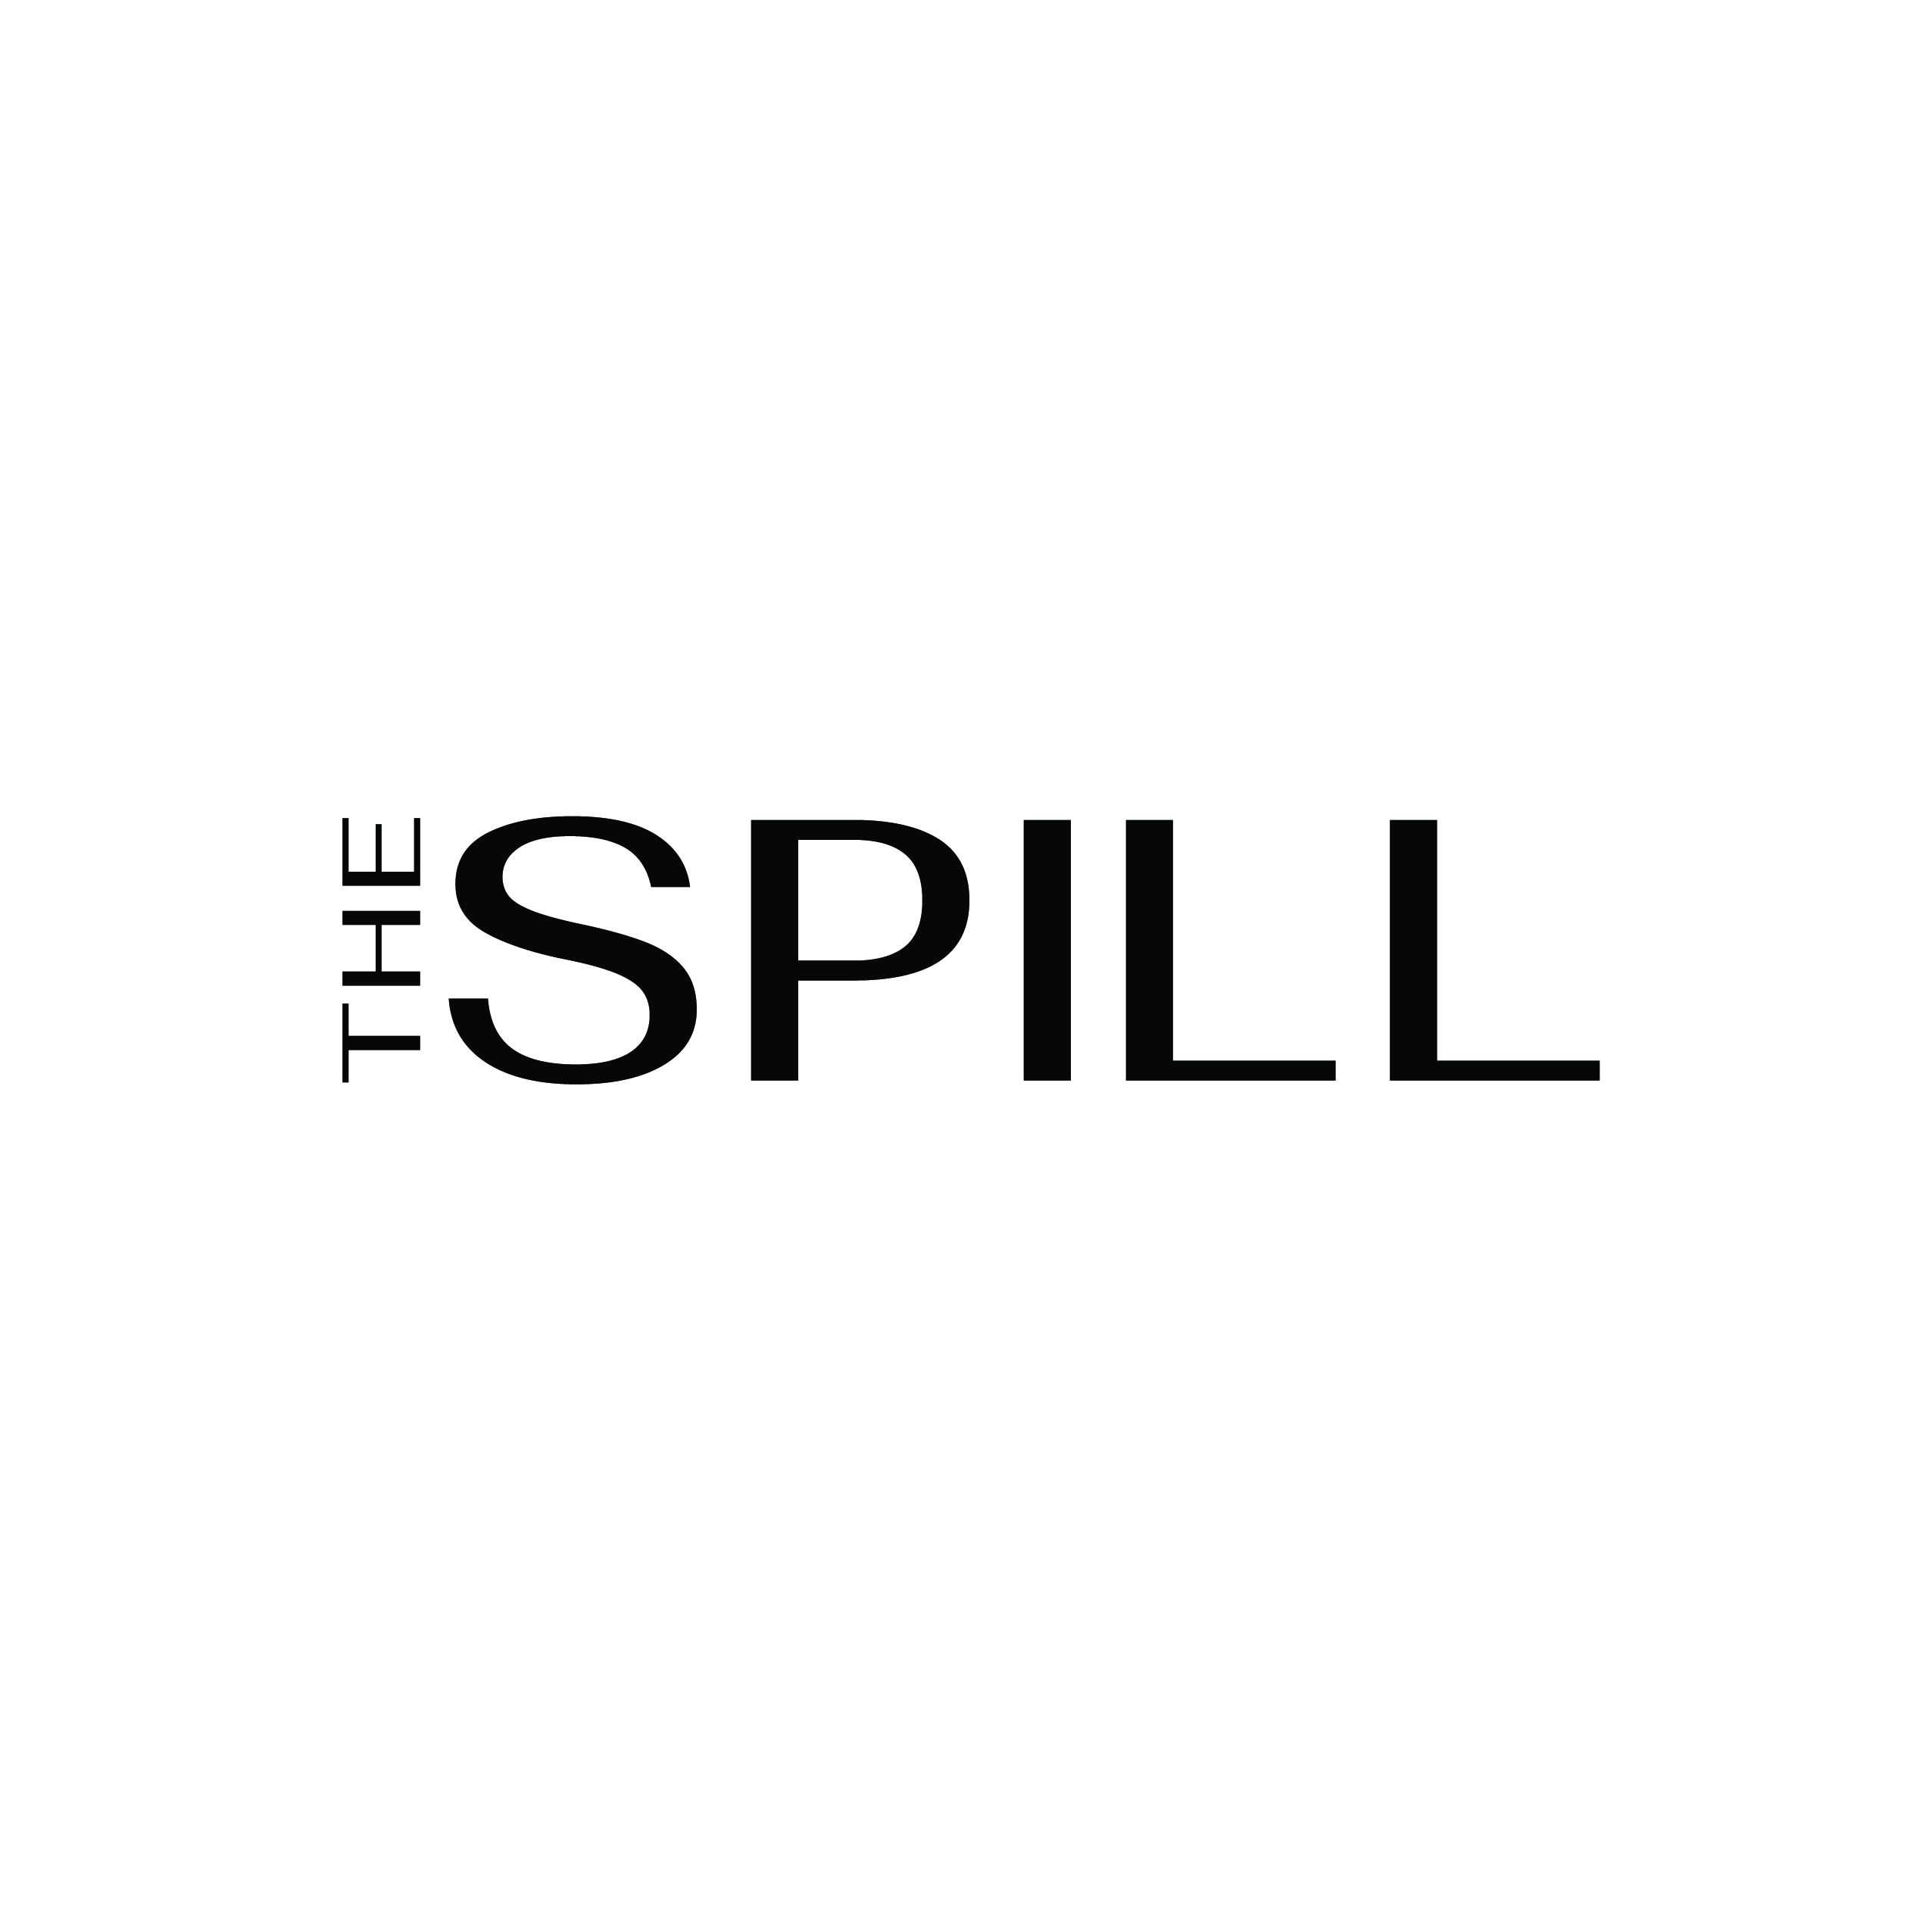 The Spill logo